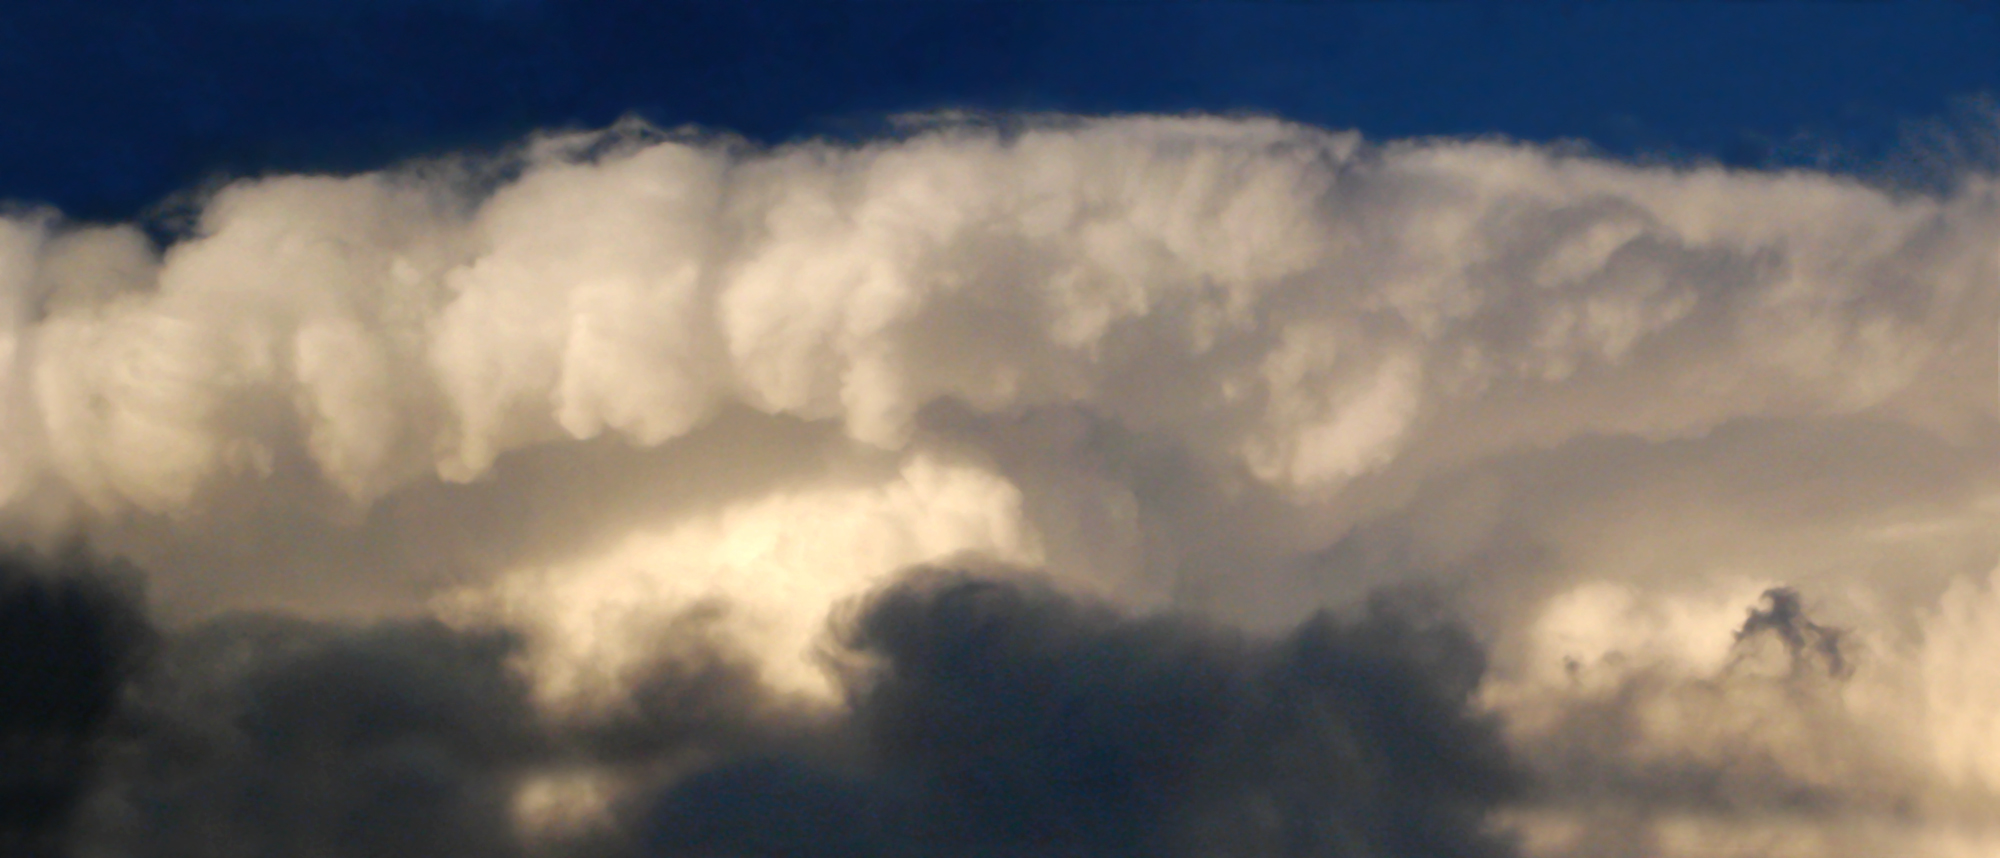 Ciel d'orage à Quinson Var - © Antonio Alvarez